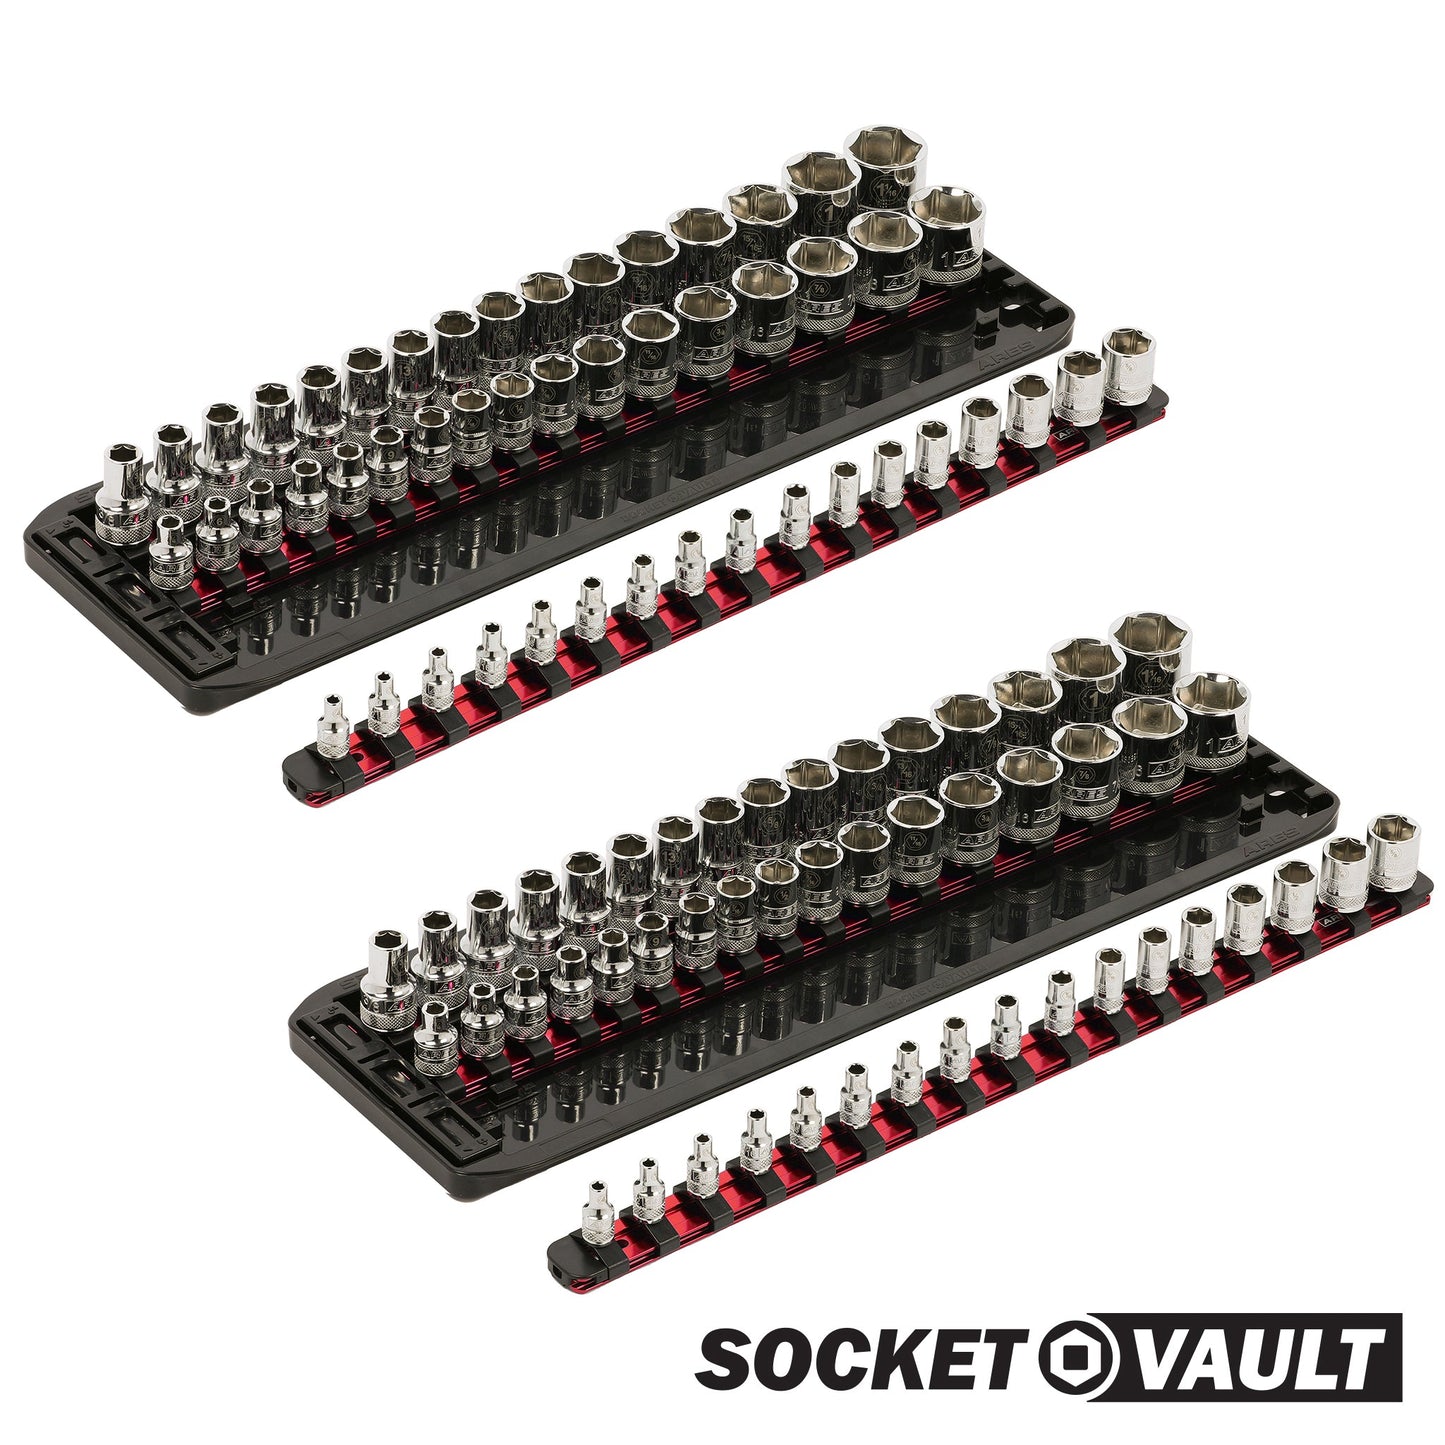 2PC. Socket Vault (Black) With 17" Aluminum Rails (Red)